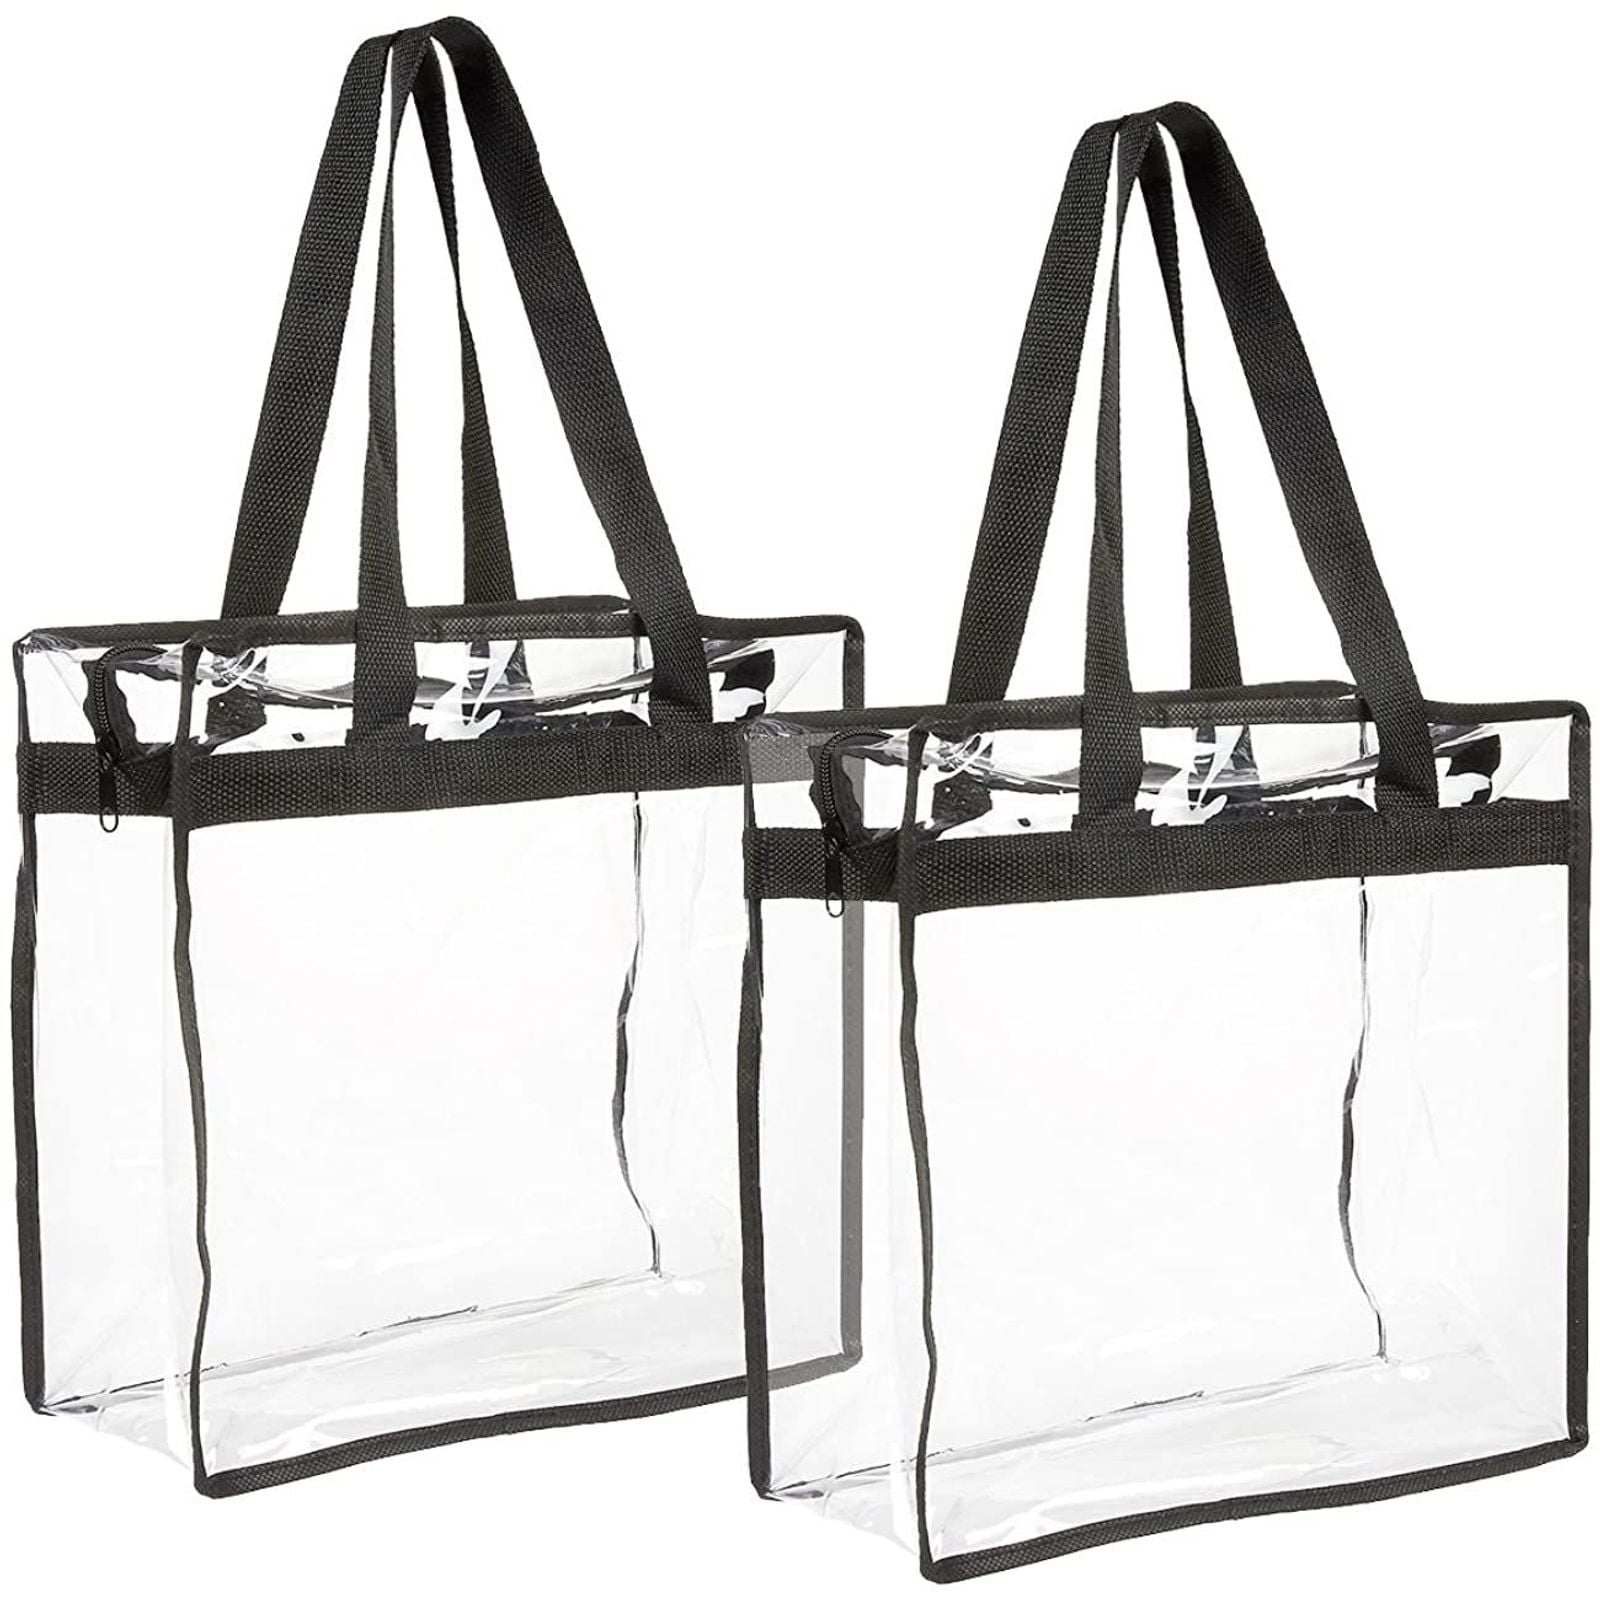 Clear Tote Bag Zippered PVC Stadium Grocery Beach Work Large Shopping Handbag 